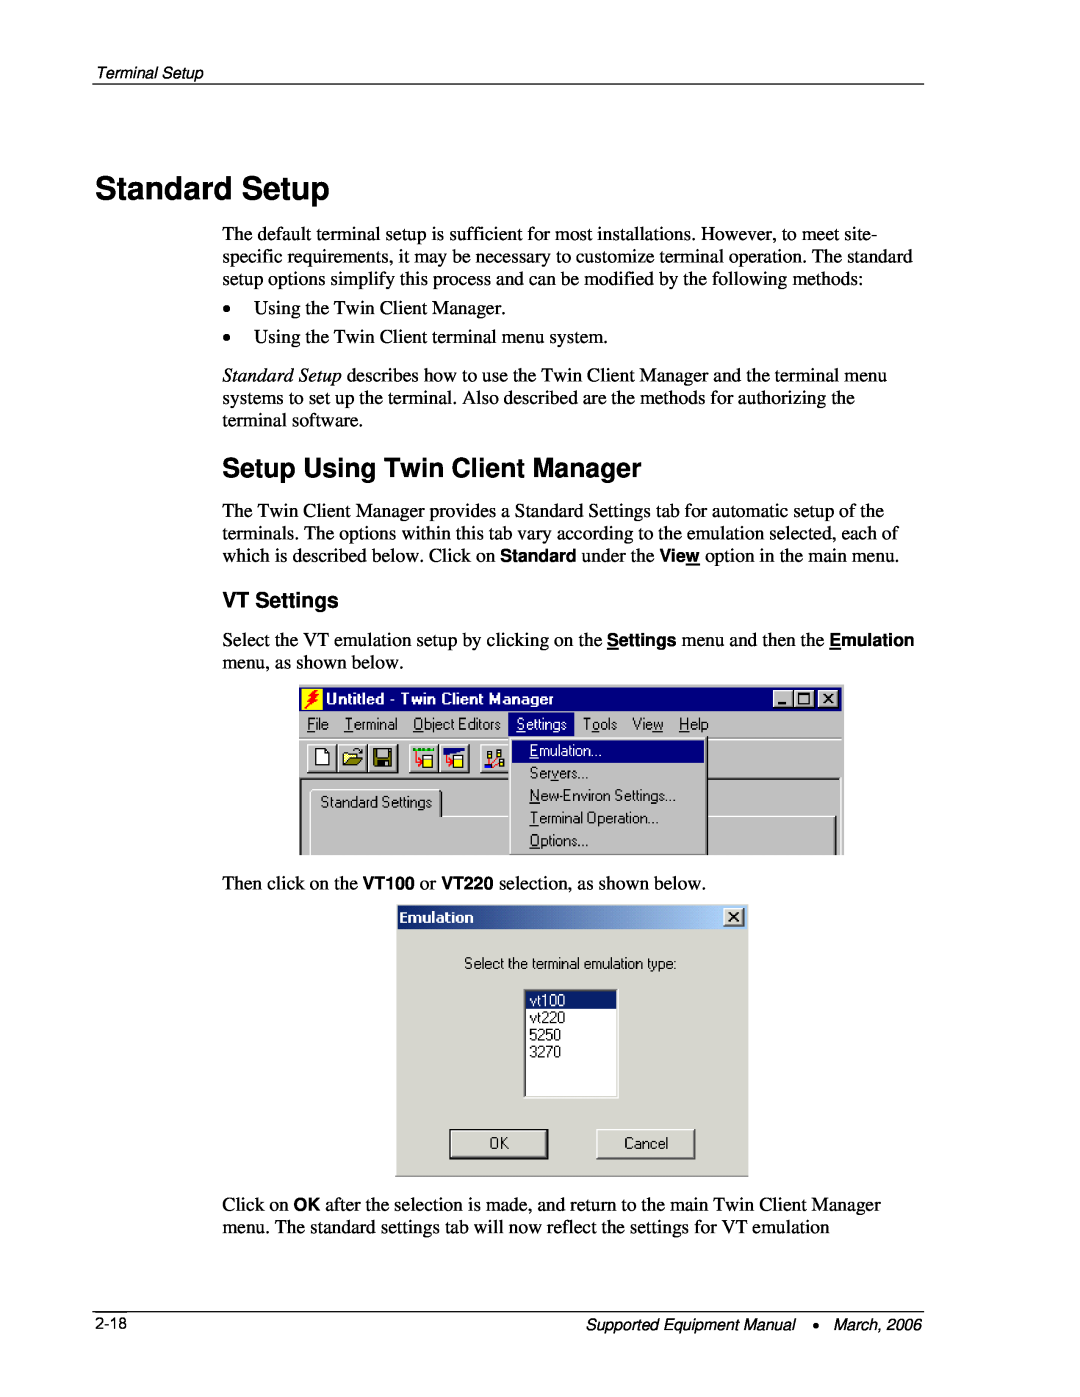 Denso BHT-7500, BHT-103 manual Standard Setup, Setup Using Twin Client Manager 